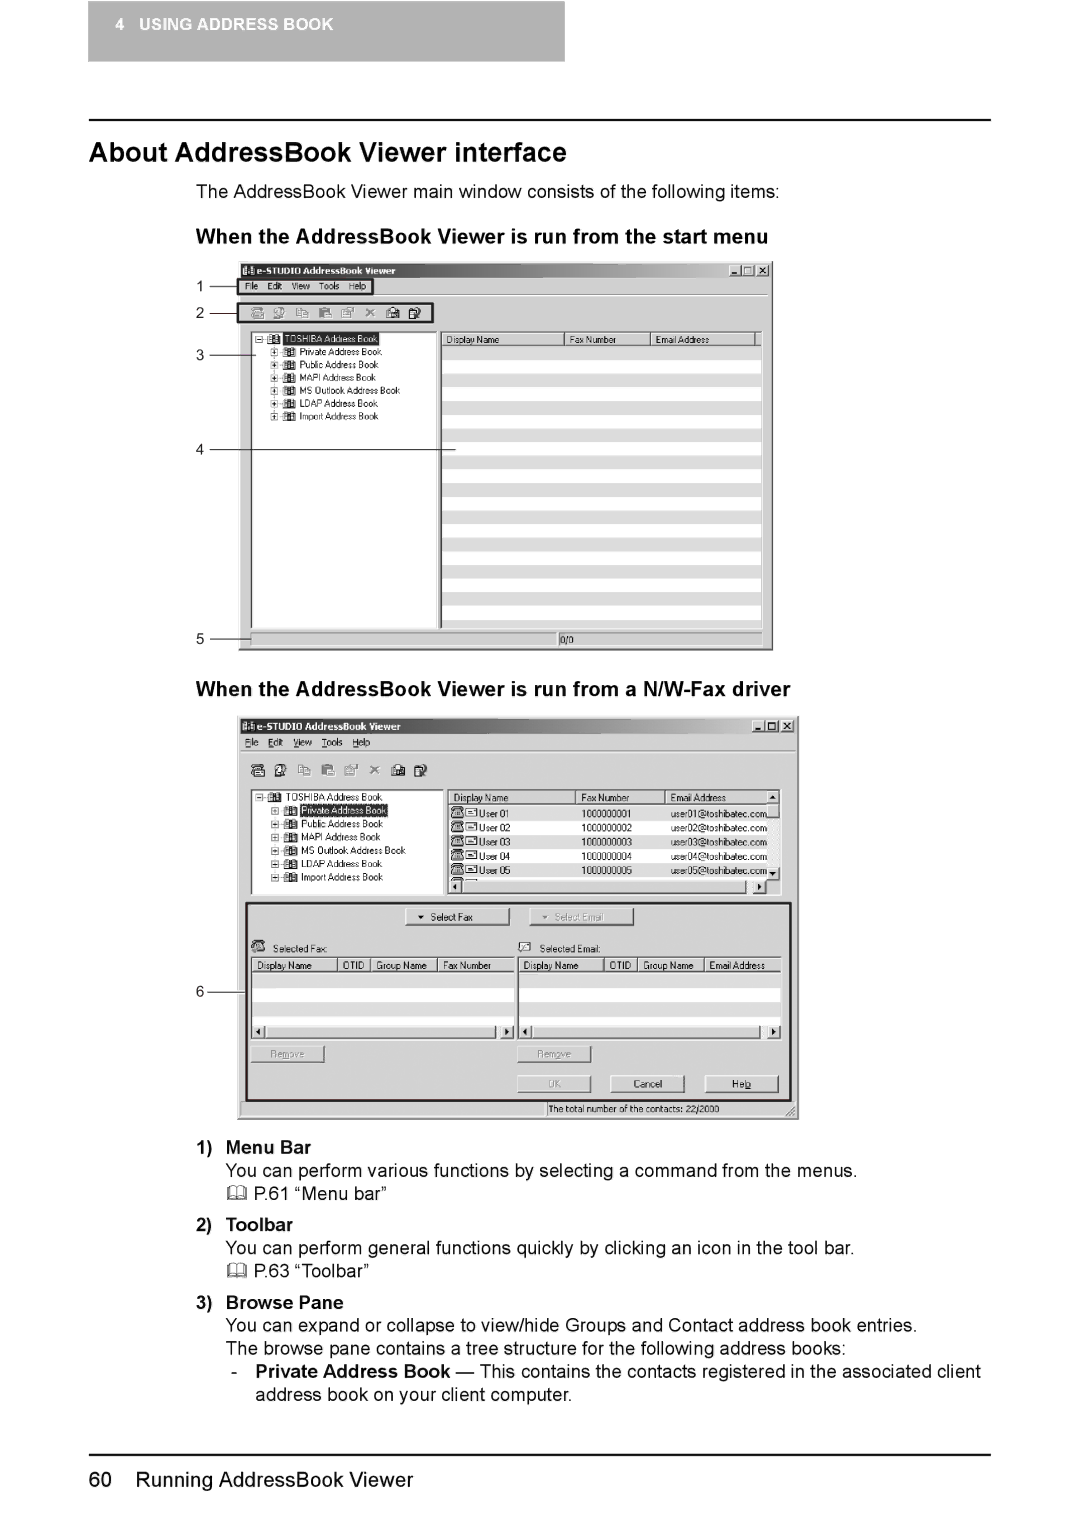 Toshiba GA-1191 manual About AddressBook Viewer interface, Menu Bar, Toolbar, Browse Pane 